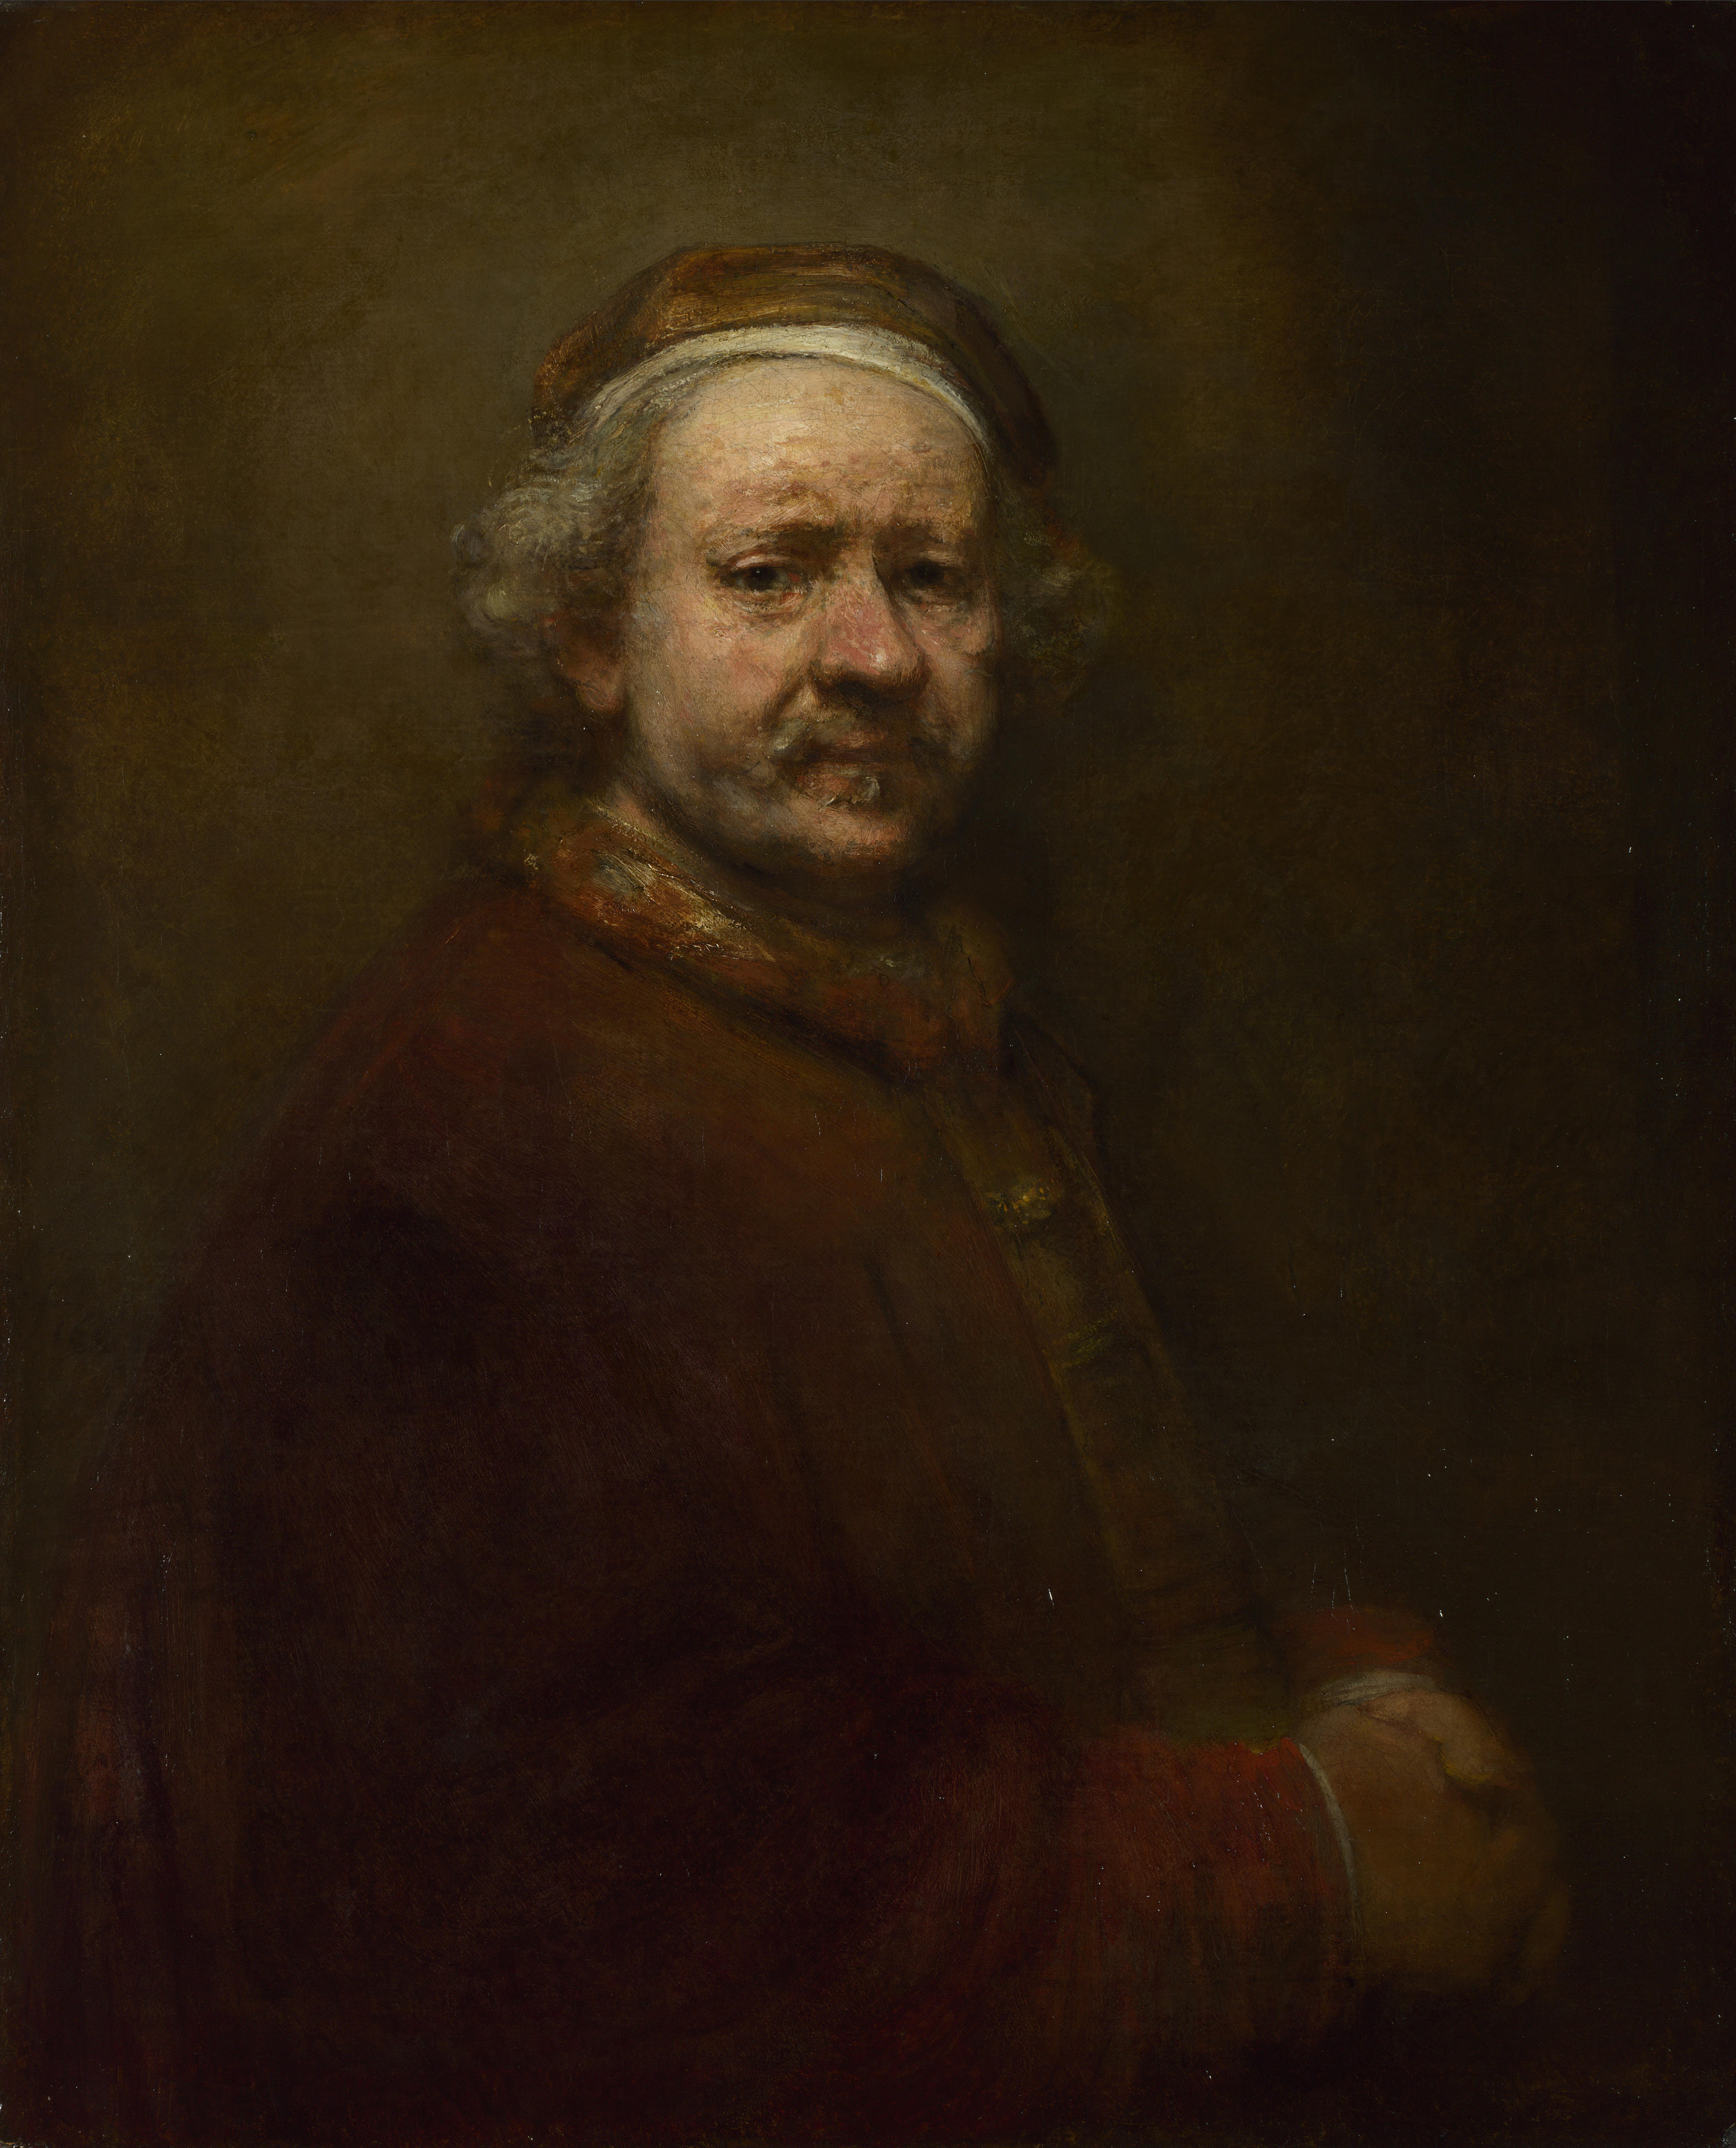 Autoportret by Rembrandt van Rijn - 1669 - 86 x 70.5 cm 